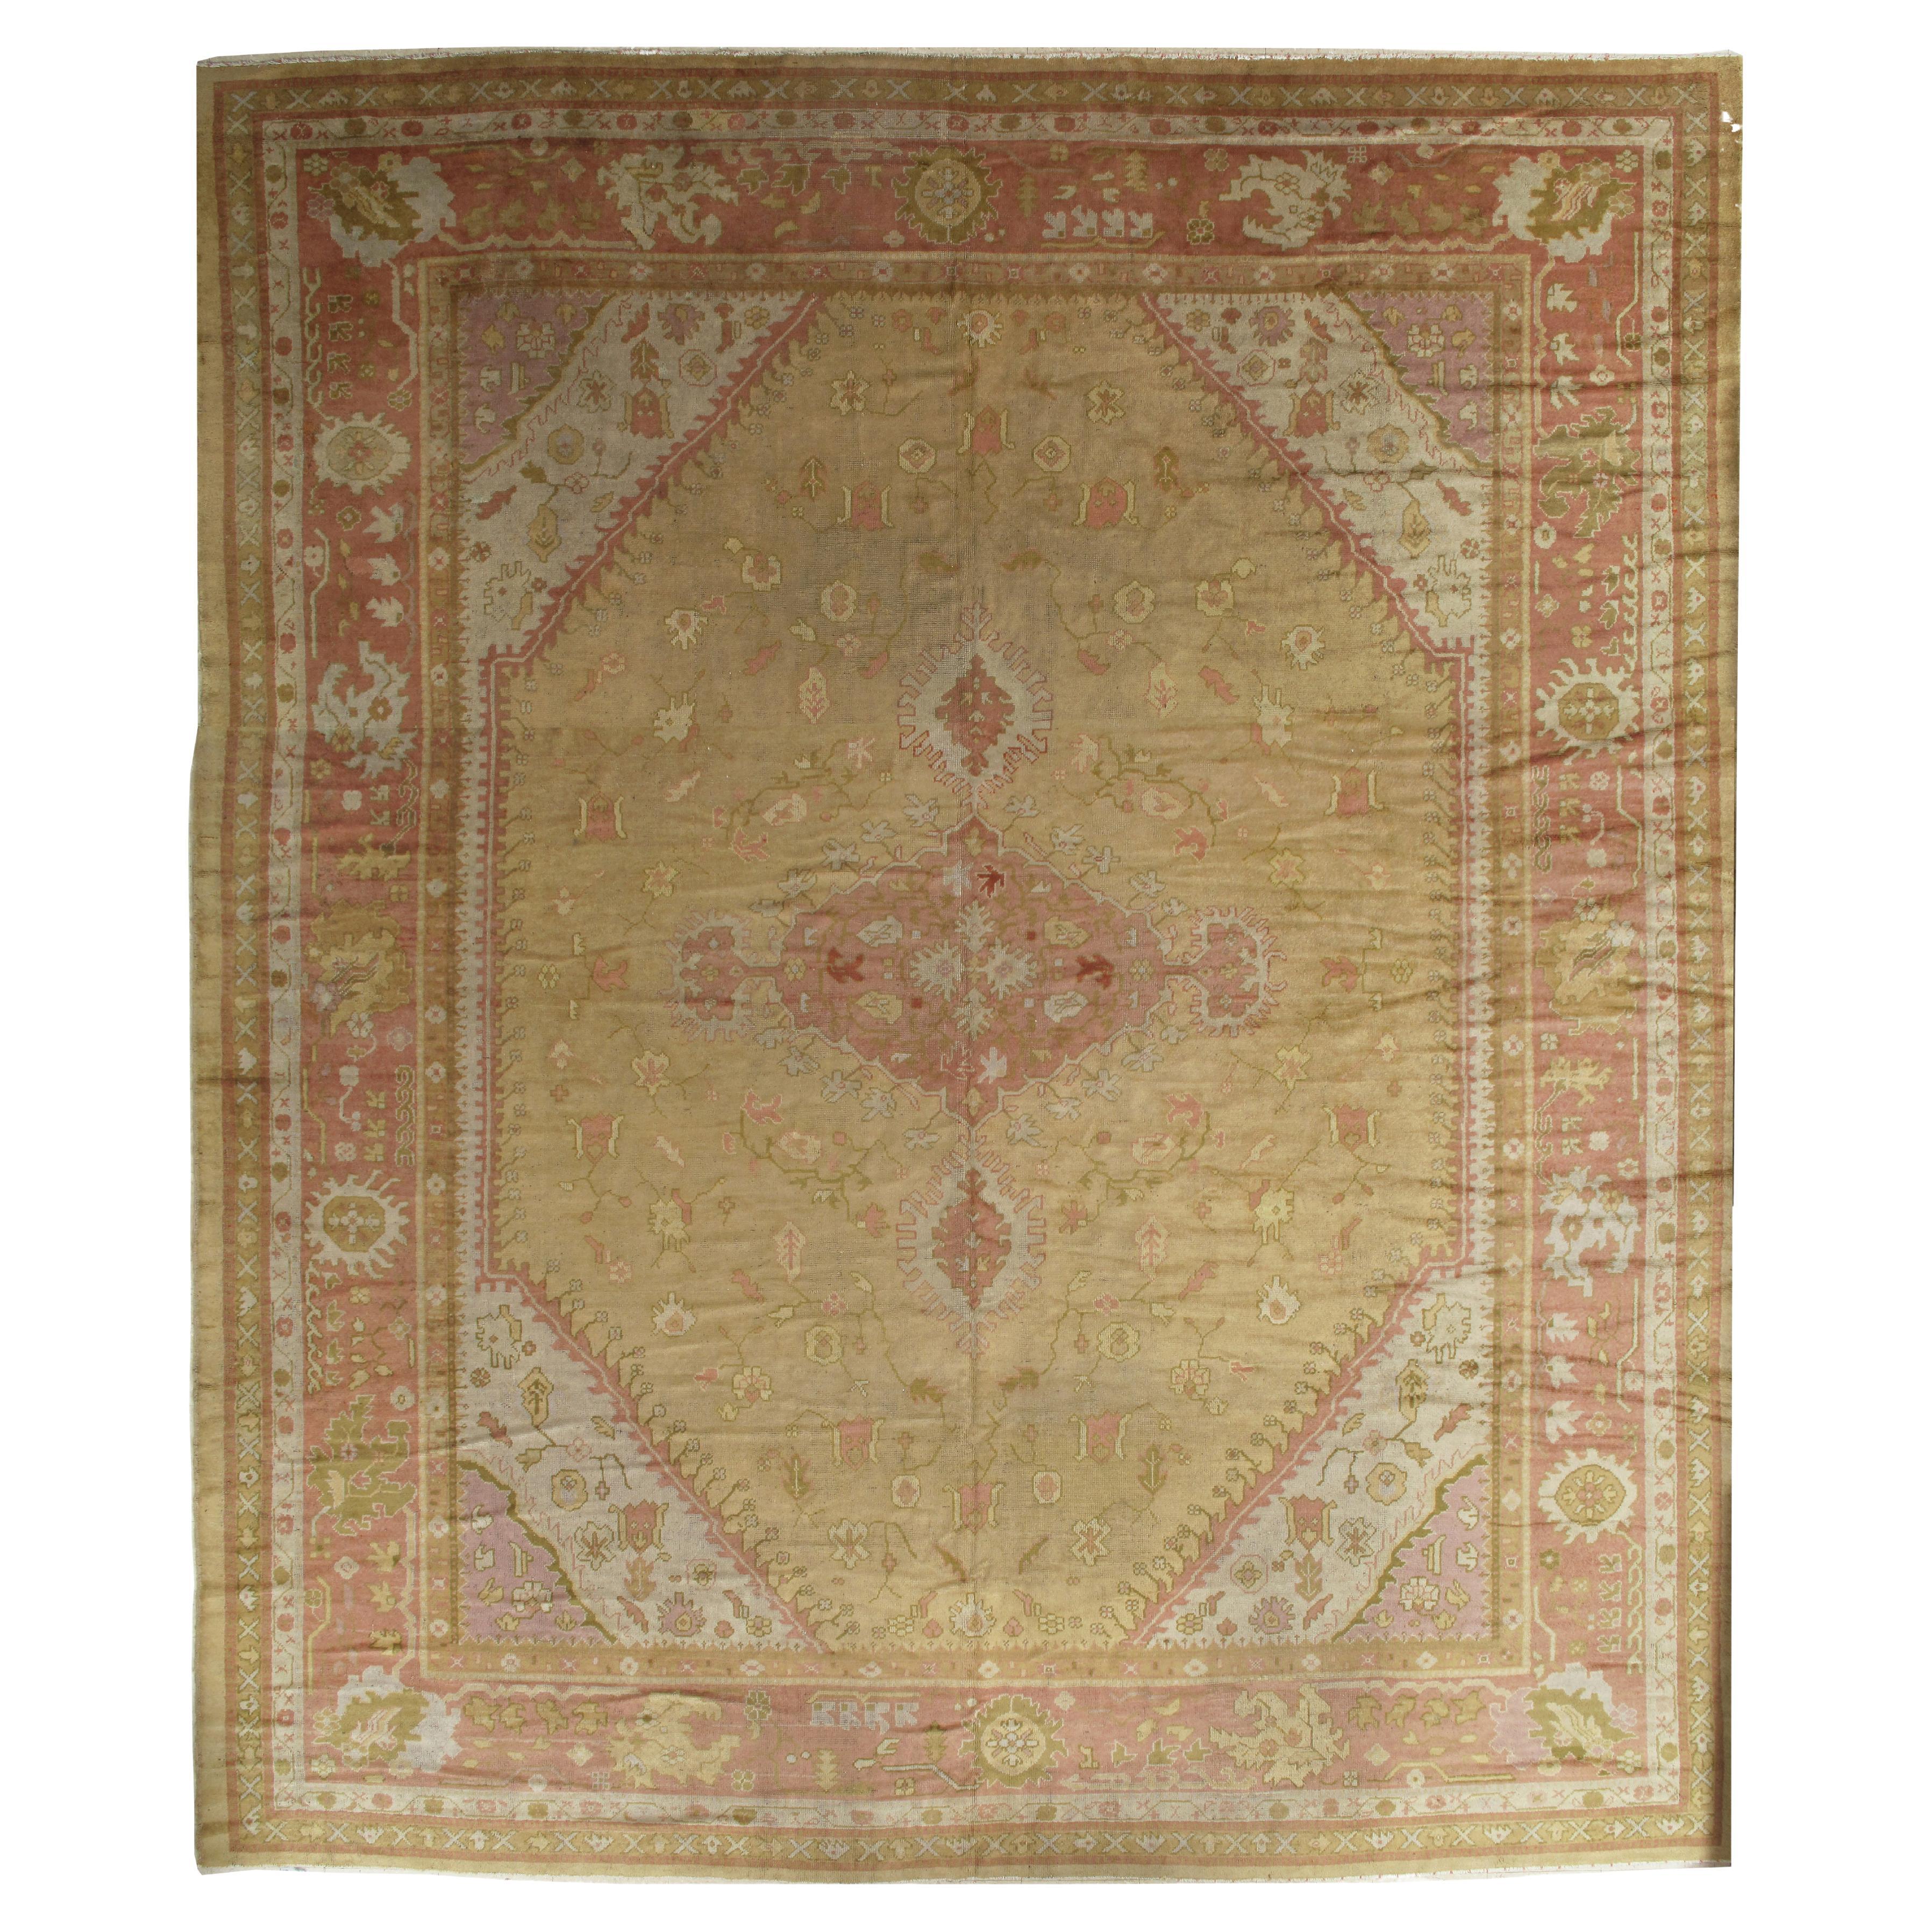 Antique Turkish Oushak Carpet, Handmade Oriental Rug, Gold, Coral, Green, Taupe